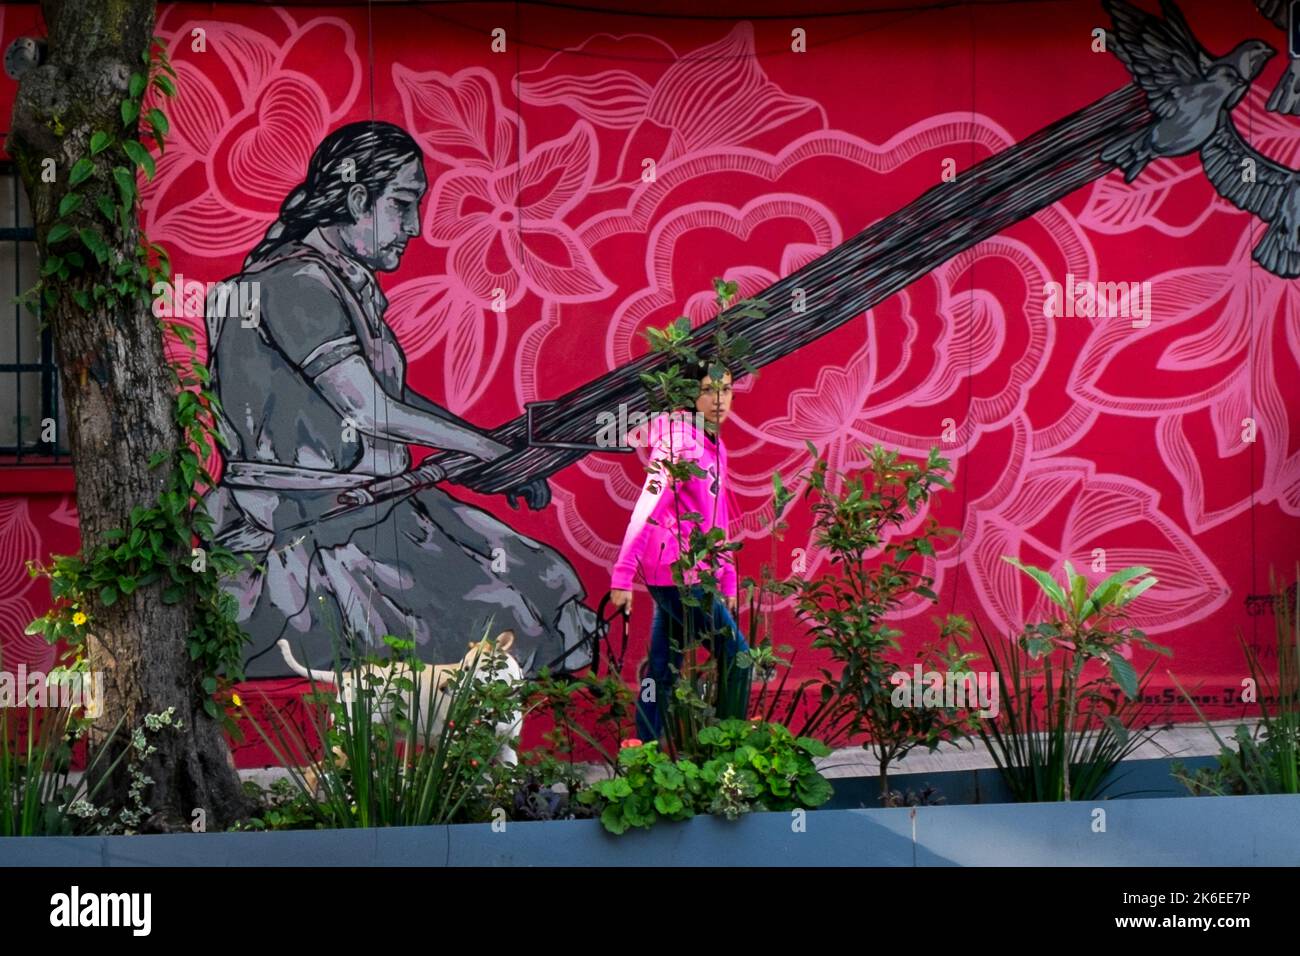 Mexico City, Roma neighborhood, mural of a woman weaving two birds, pedestrian walking a dog Stock Photo